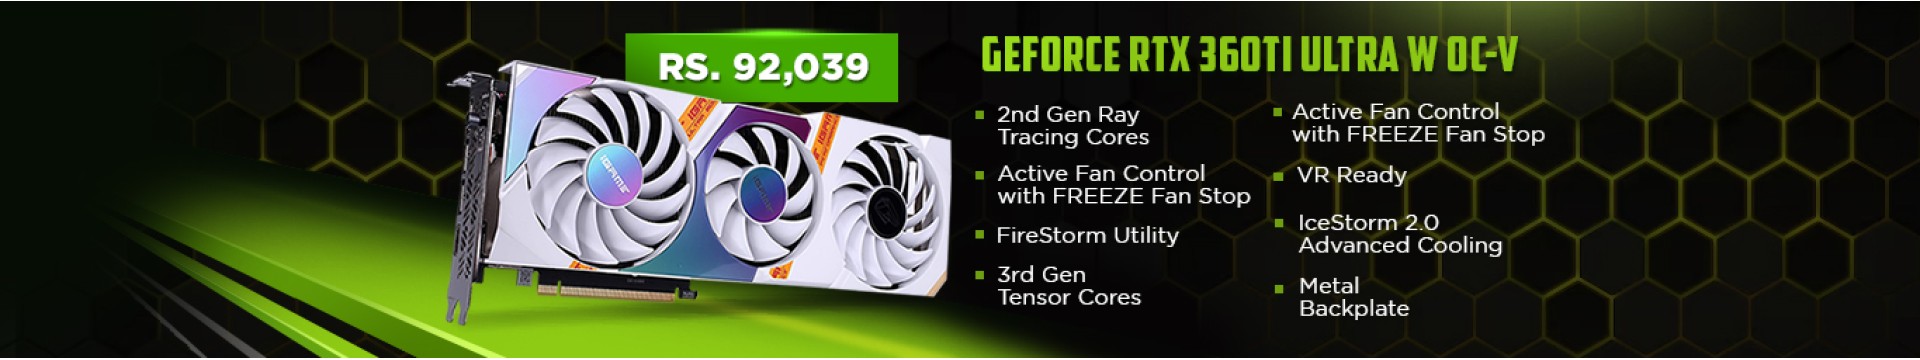 Geforce-Rtx360-ti-Ultra-W-OC